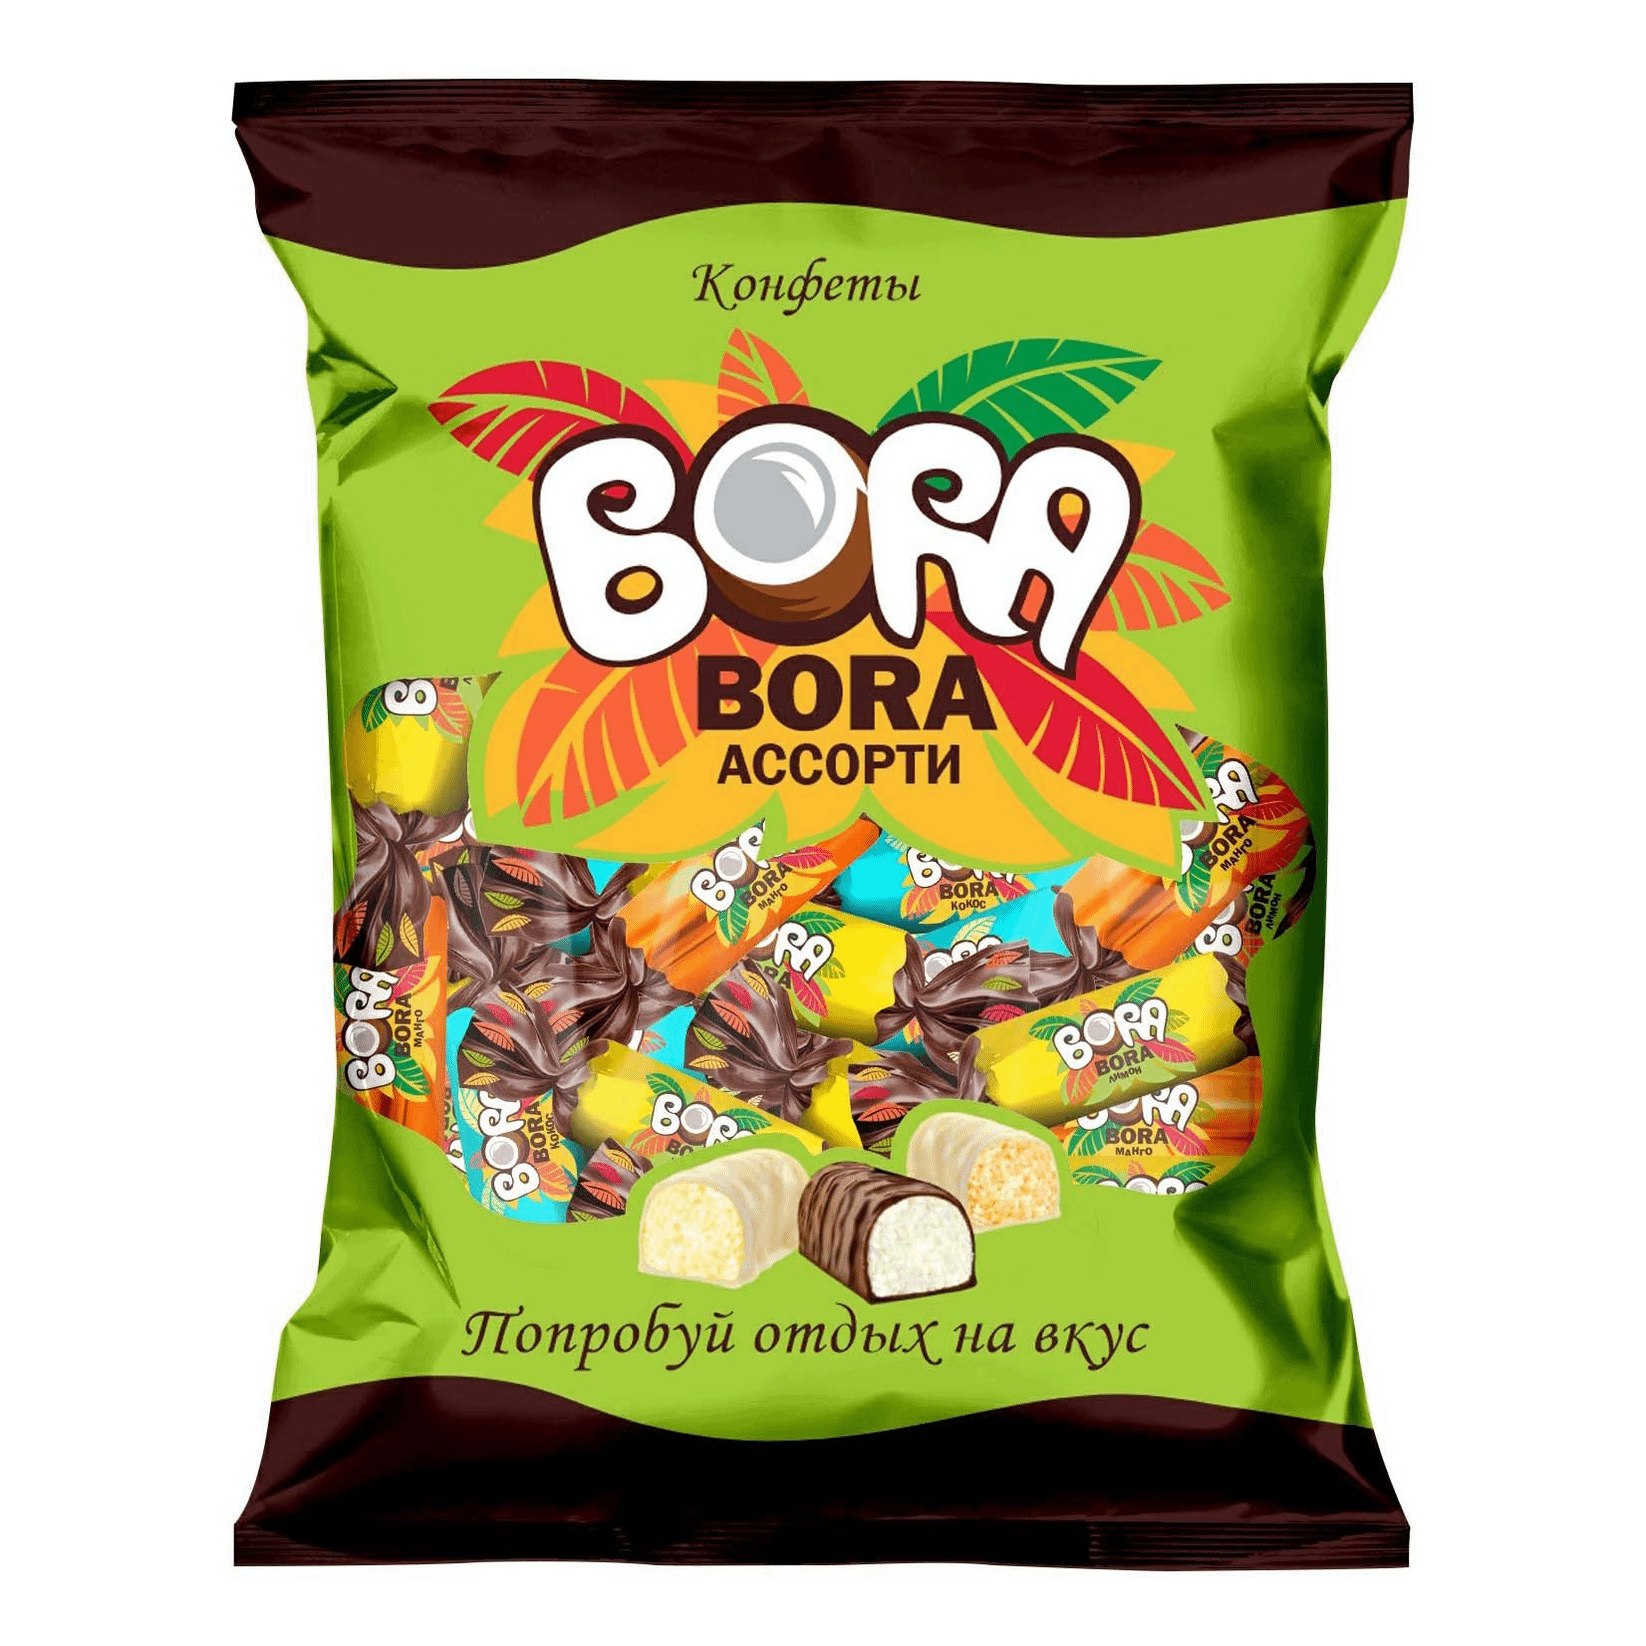 Конфеты Bora-bora ассорти, кокос, лимон, манго, 200 г